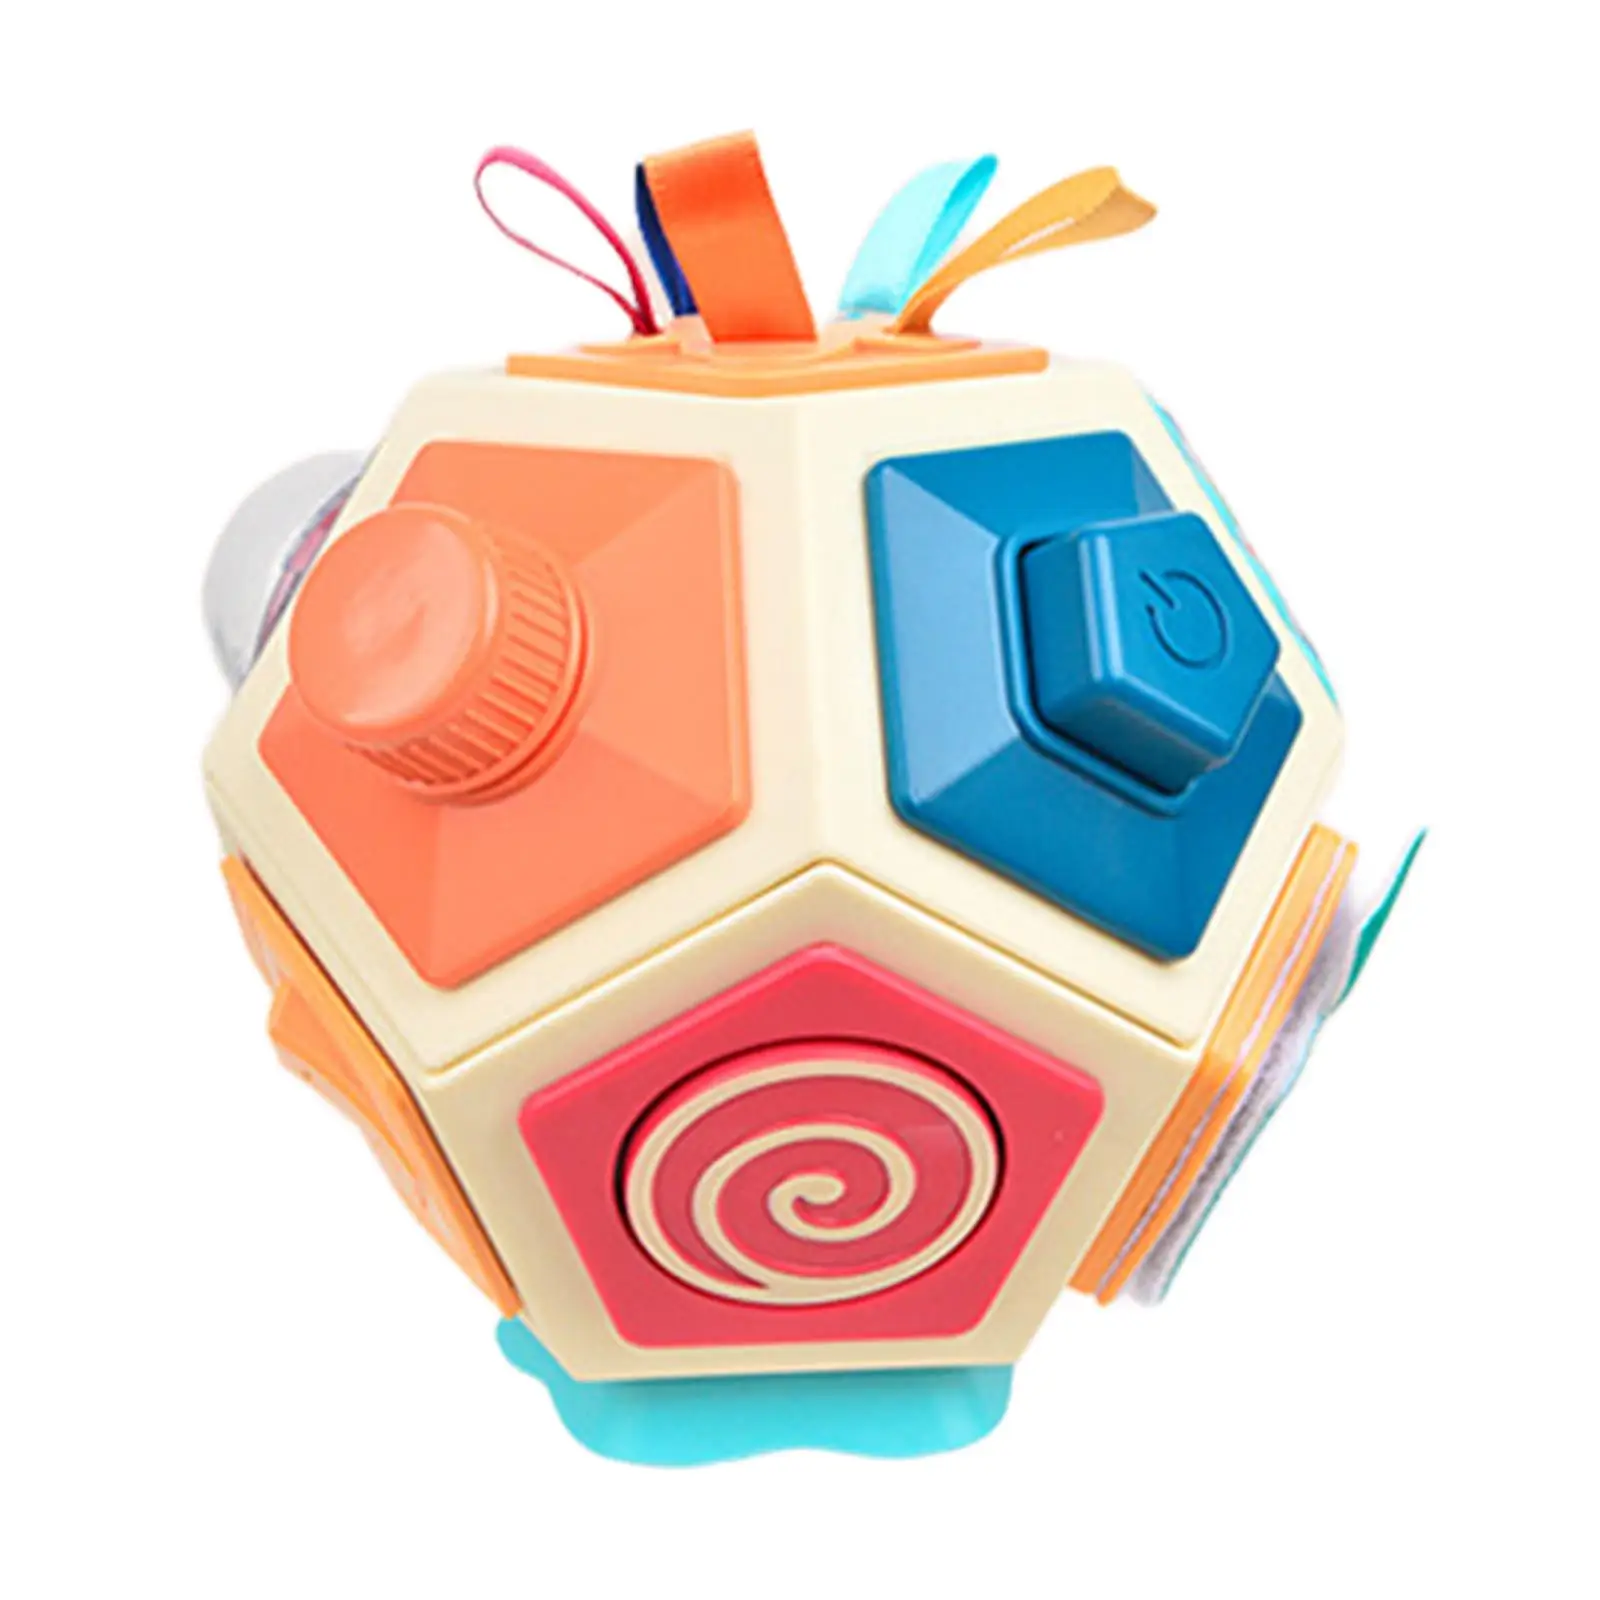 Sensory Busy Ball Montessori Early Education Training for Birthday Gift Baby